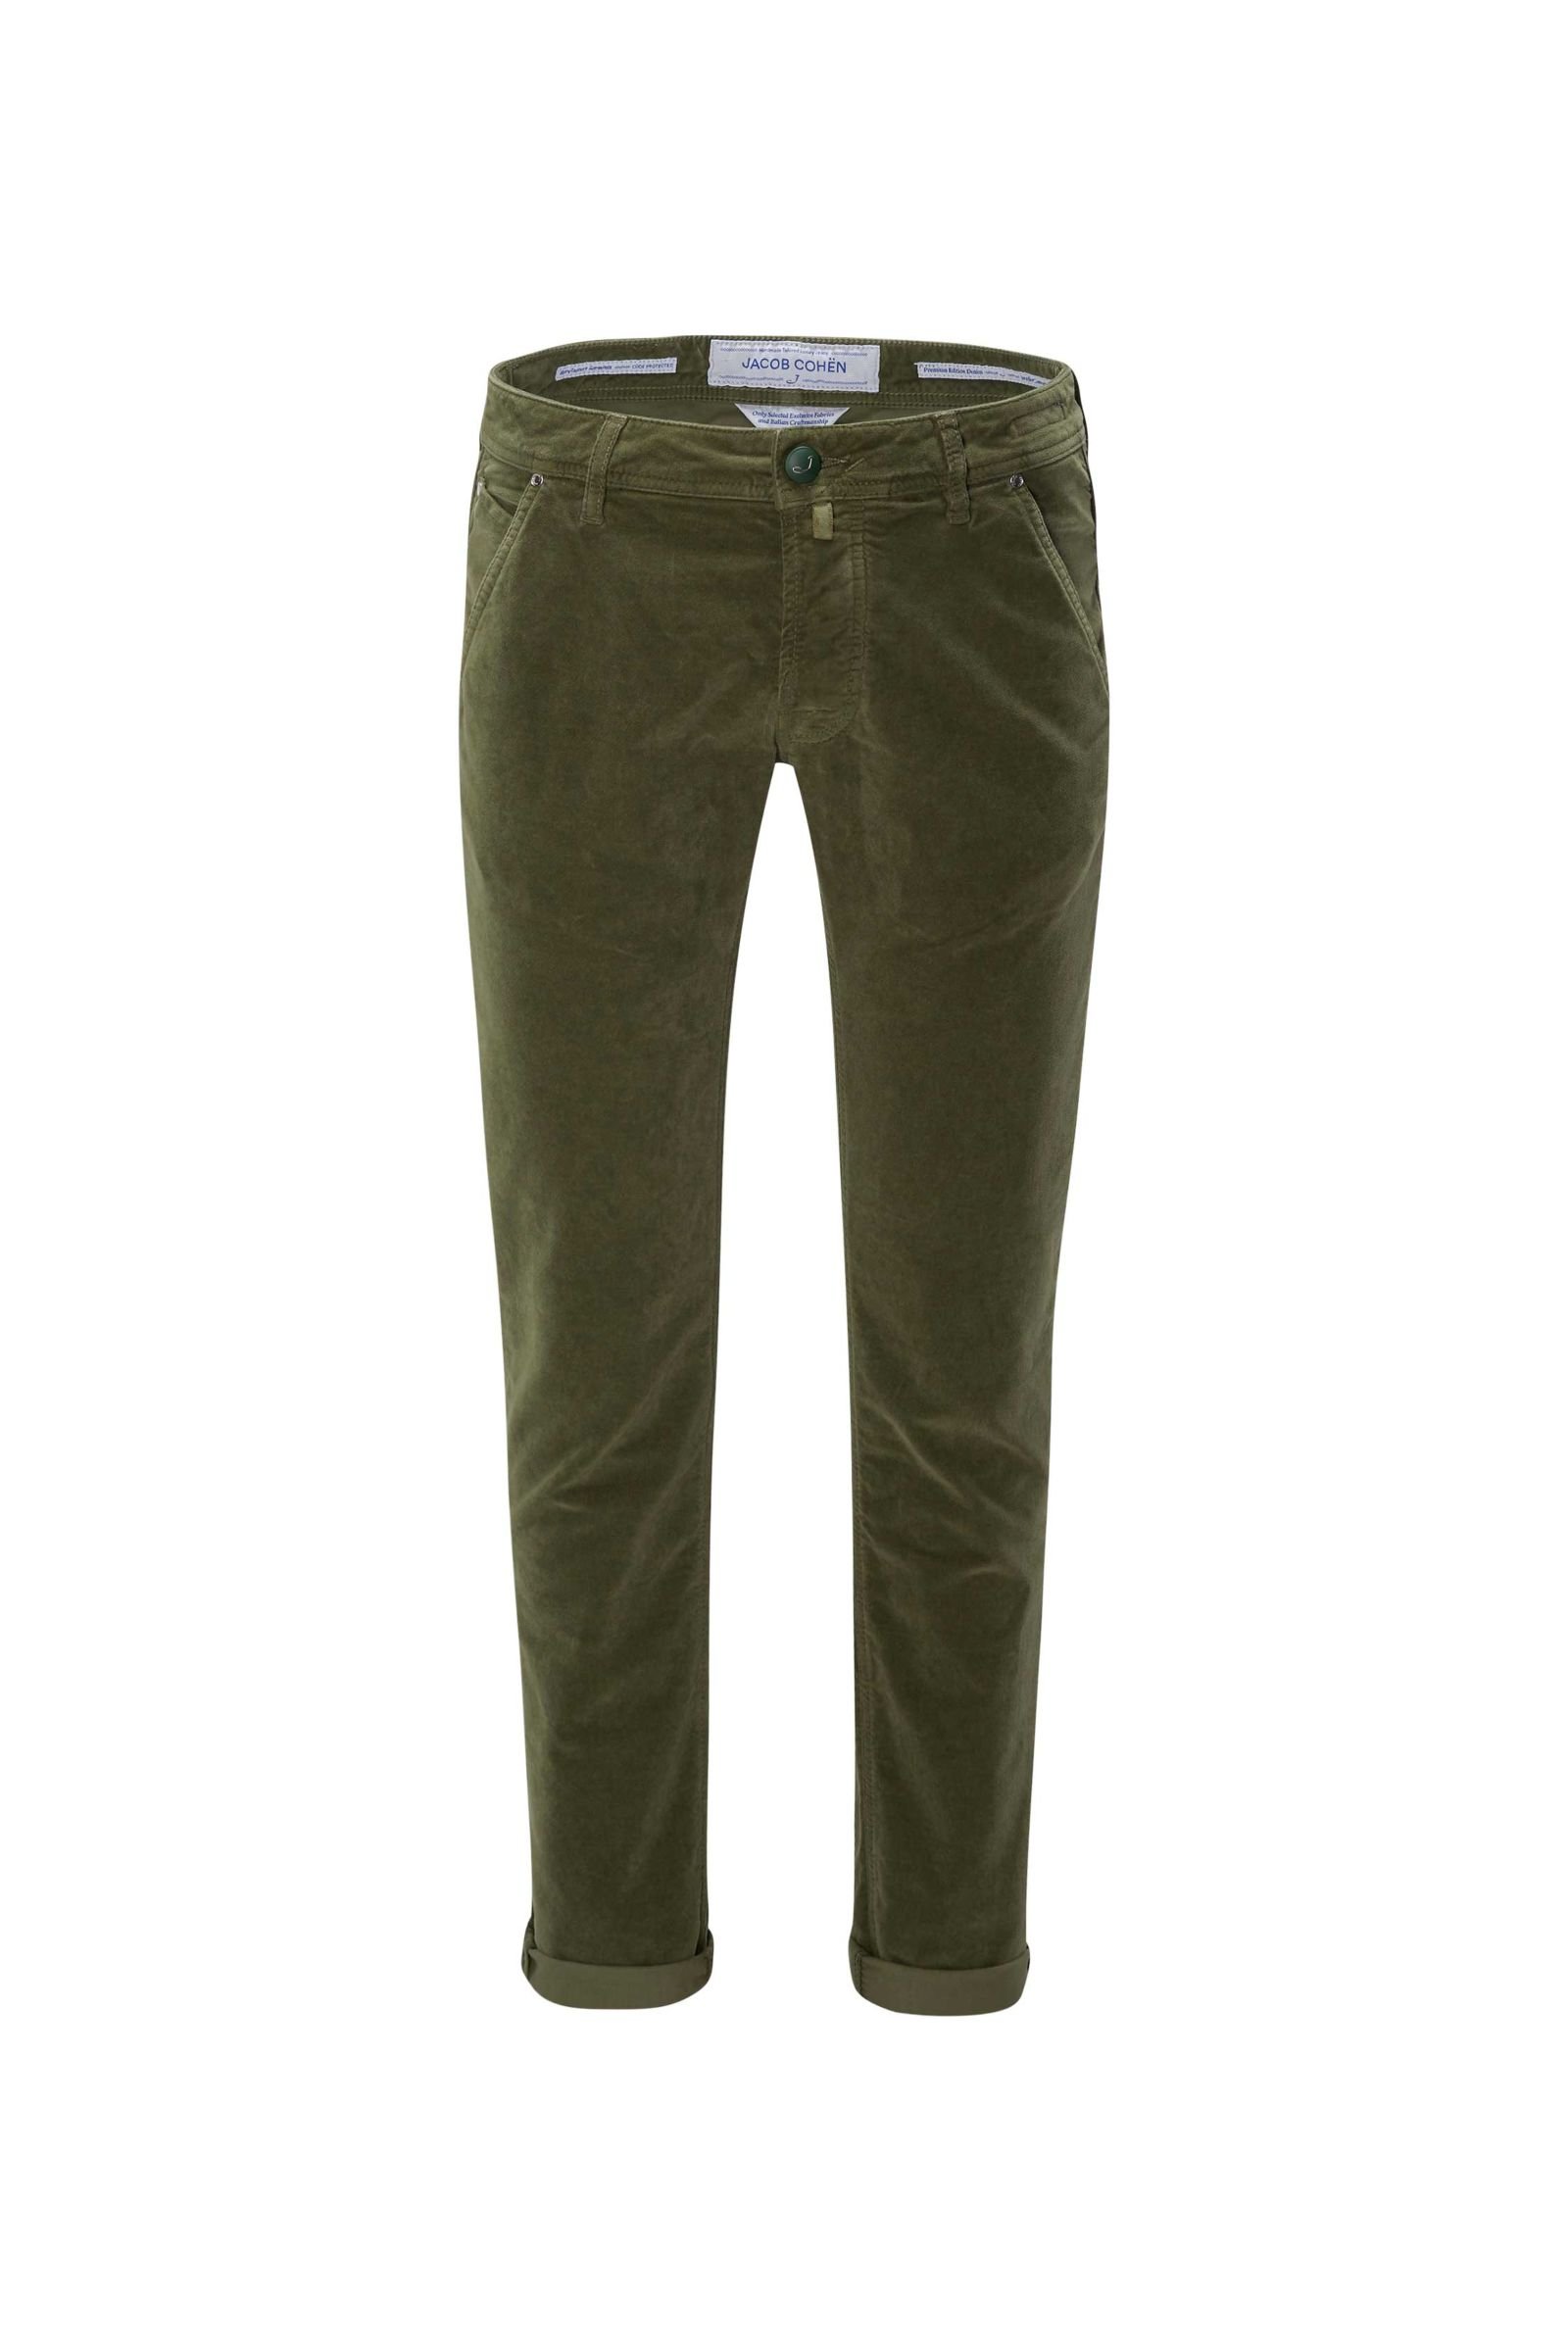 Fustian trousers 'J613 Comfort Slim Fit' olive